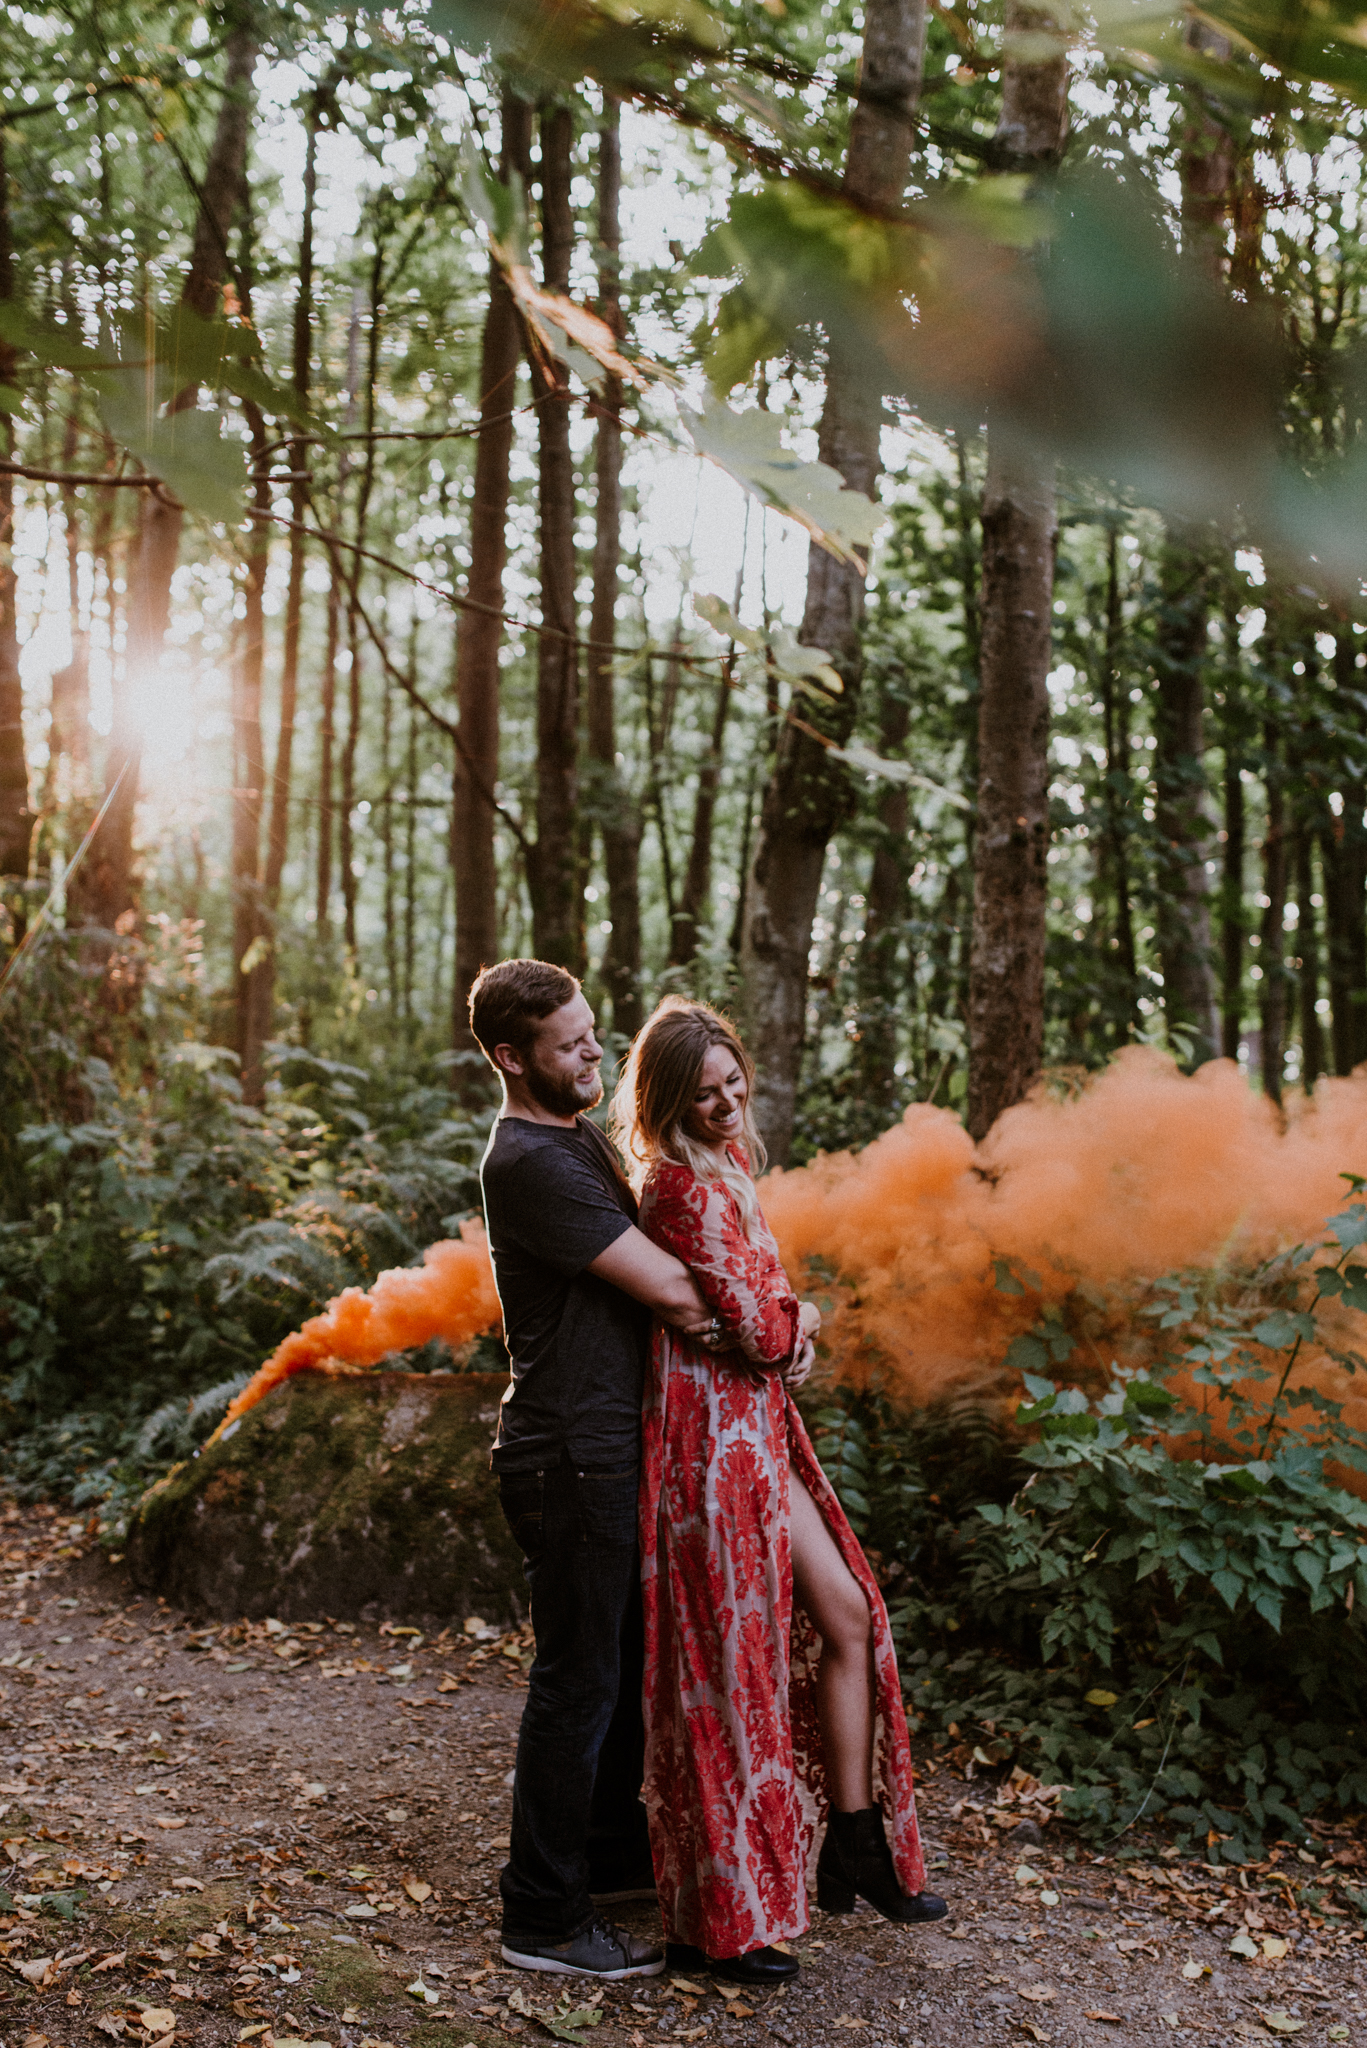 018_StacieCarrPhotography_vancouver-elopement-photographer-adventurous-engagement-smoke-bomb-beach.jpg